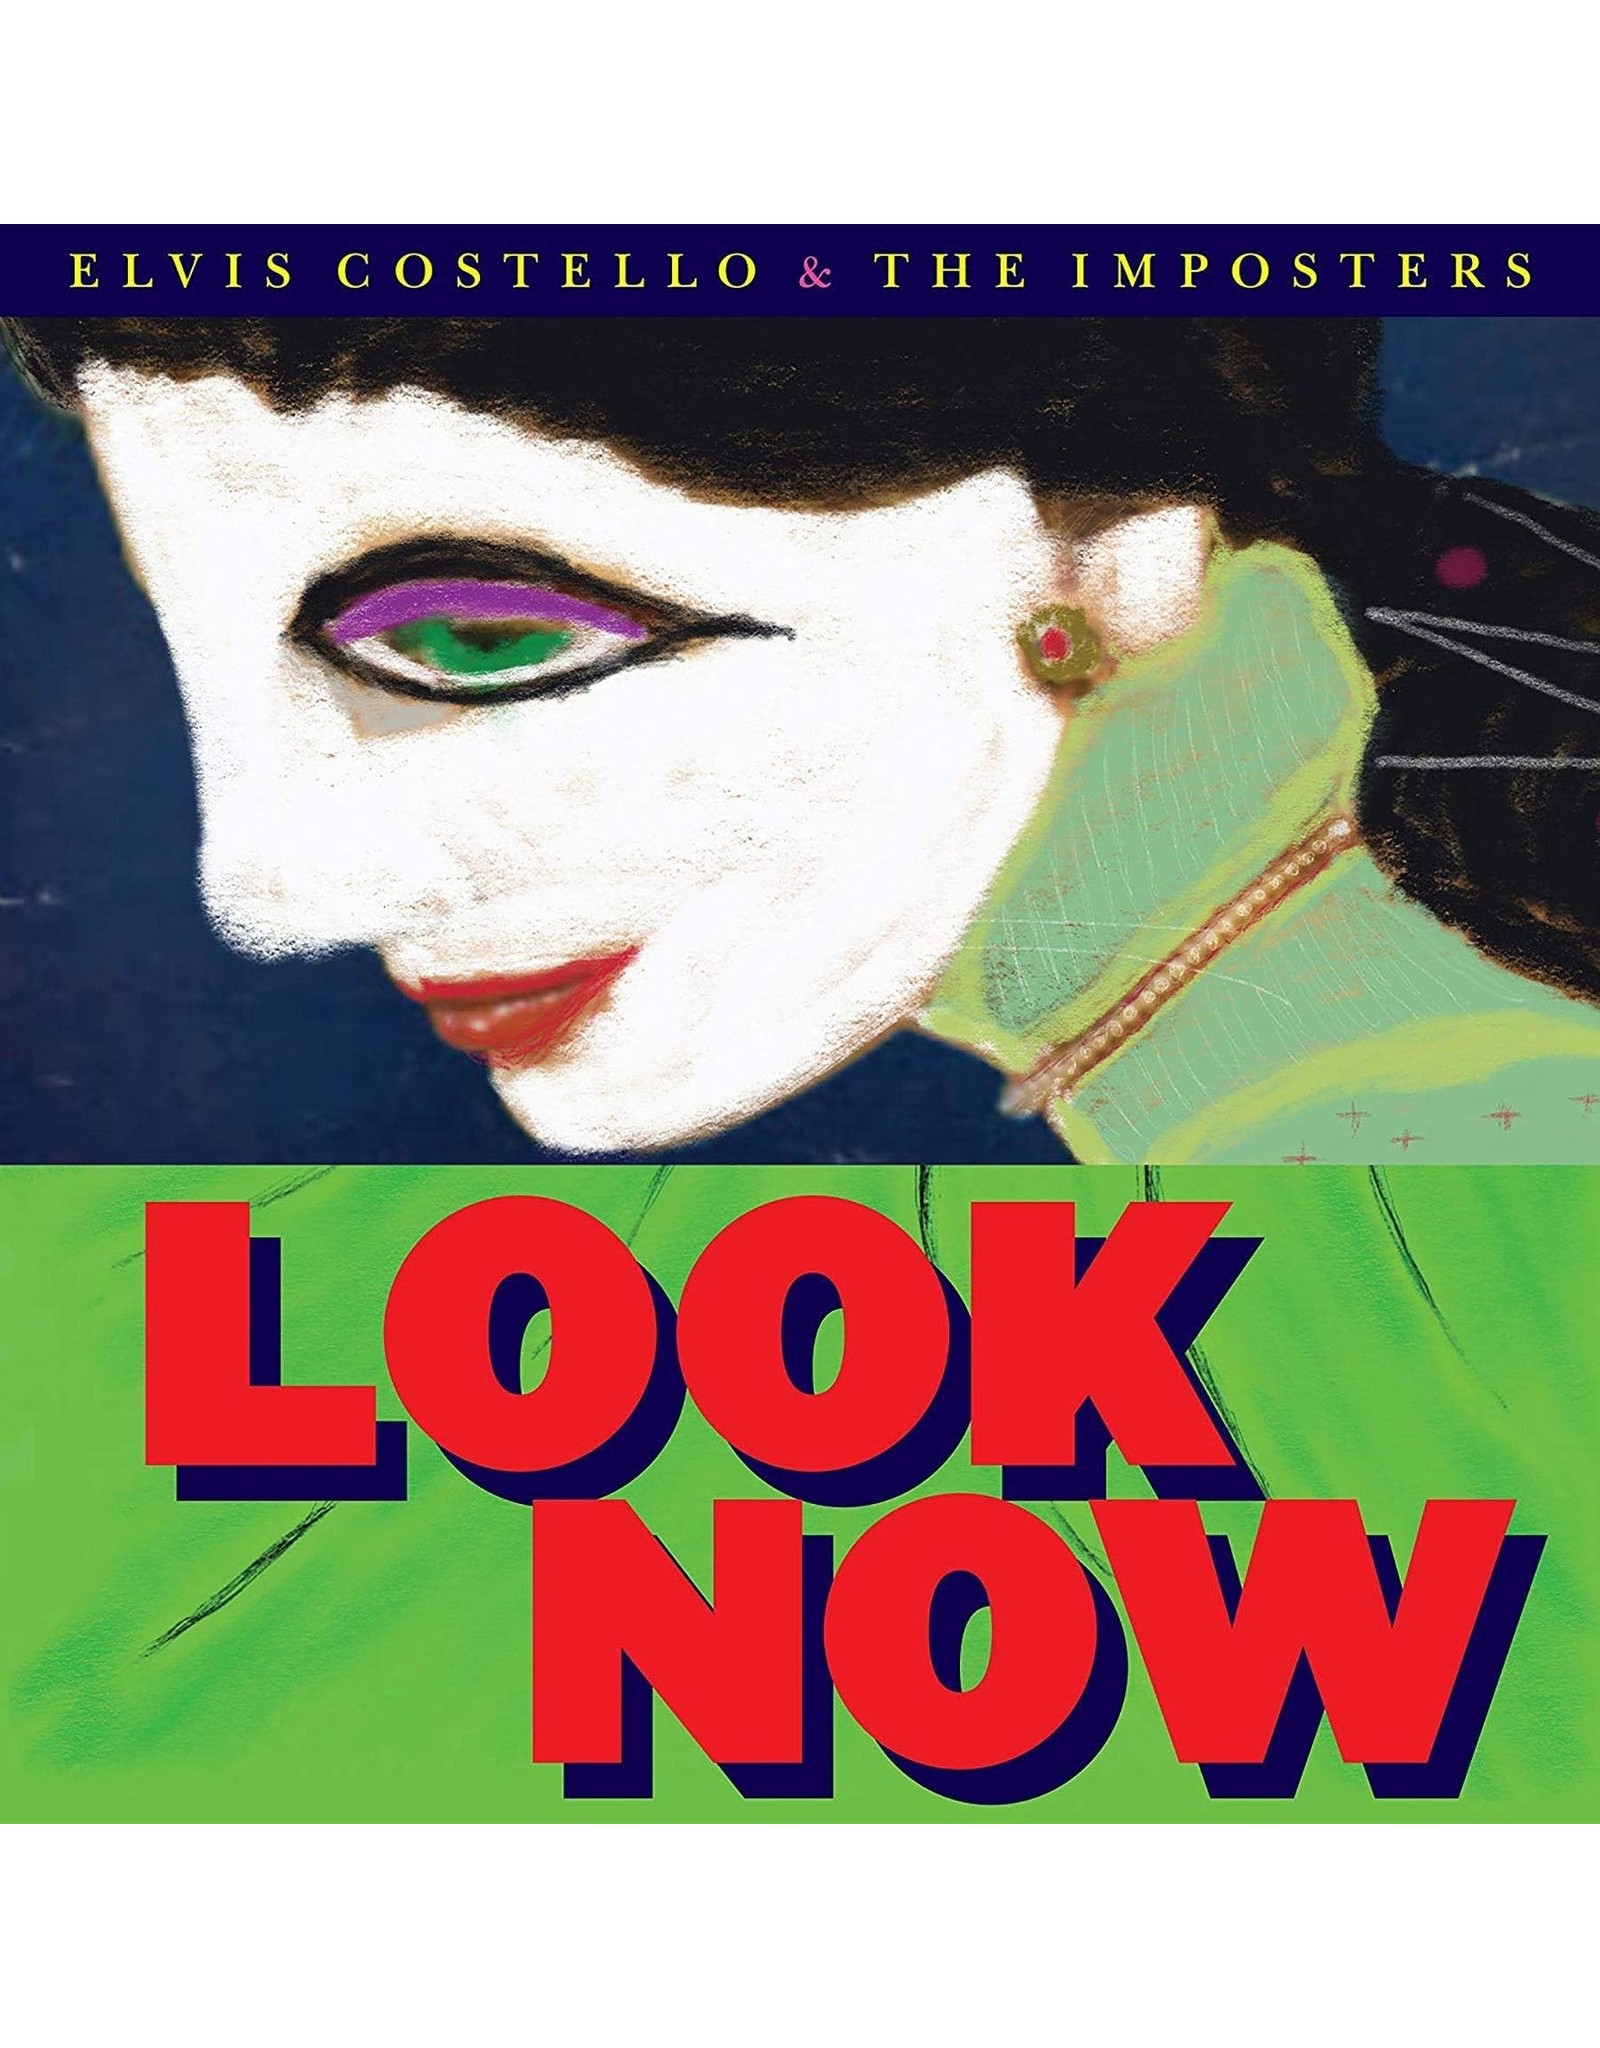 Elvis Costello - Look Now